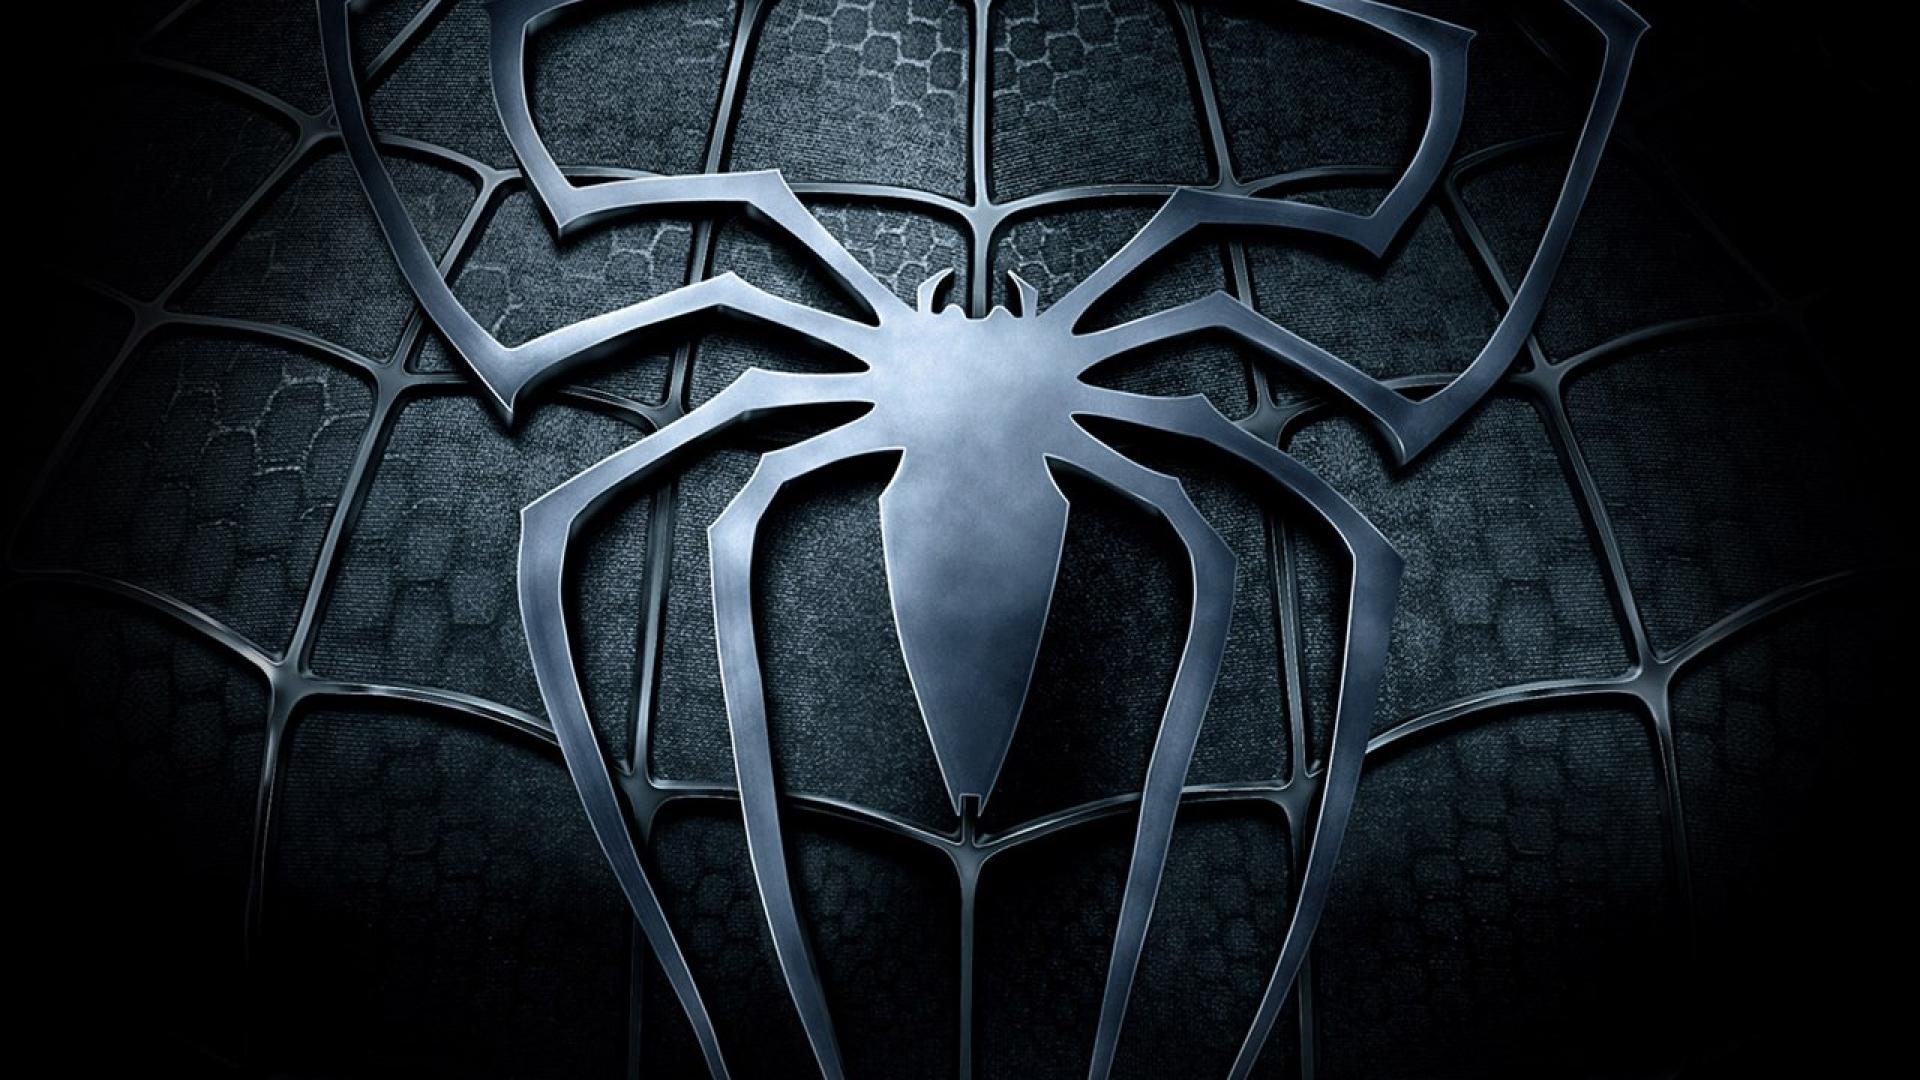 venom spiderman logo movies HD Wallpapers wallpapers